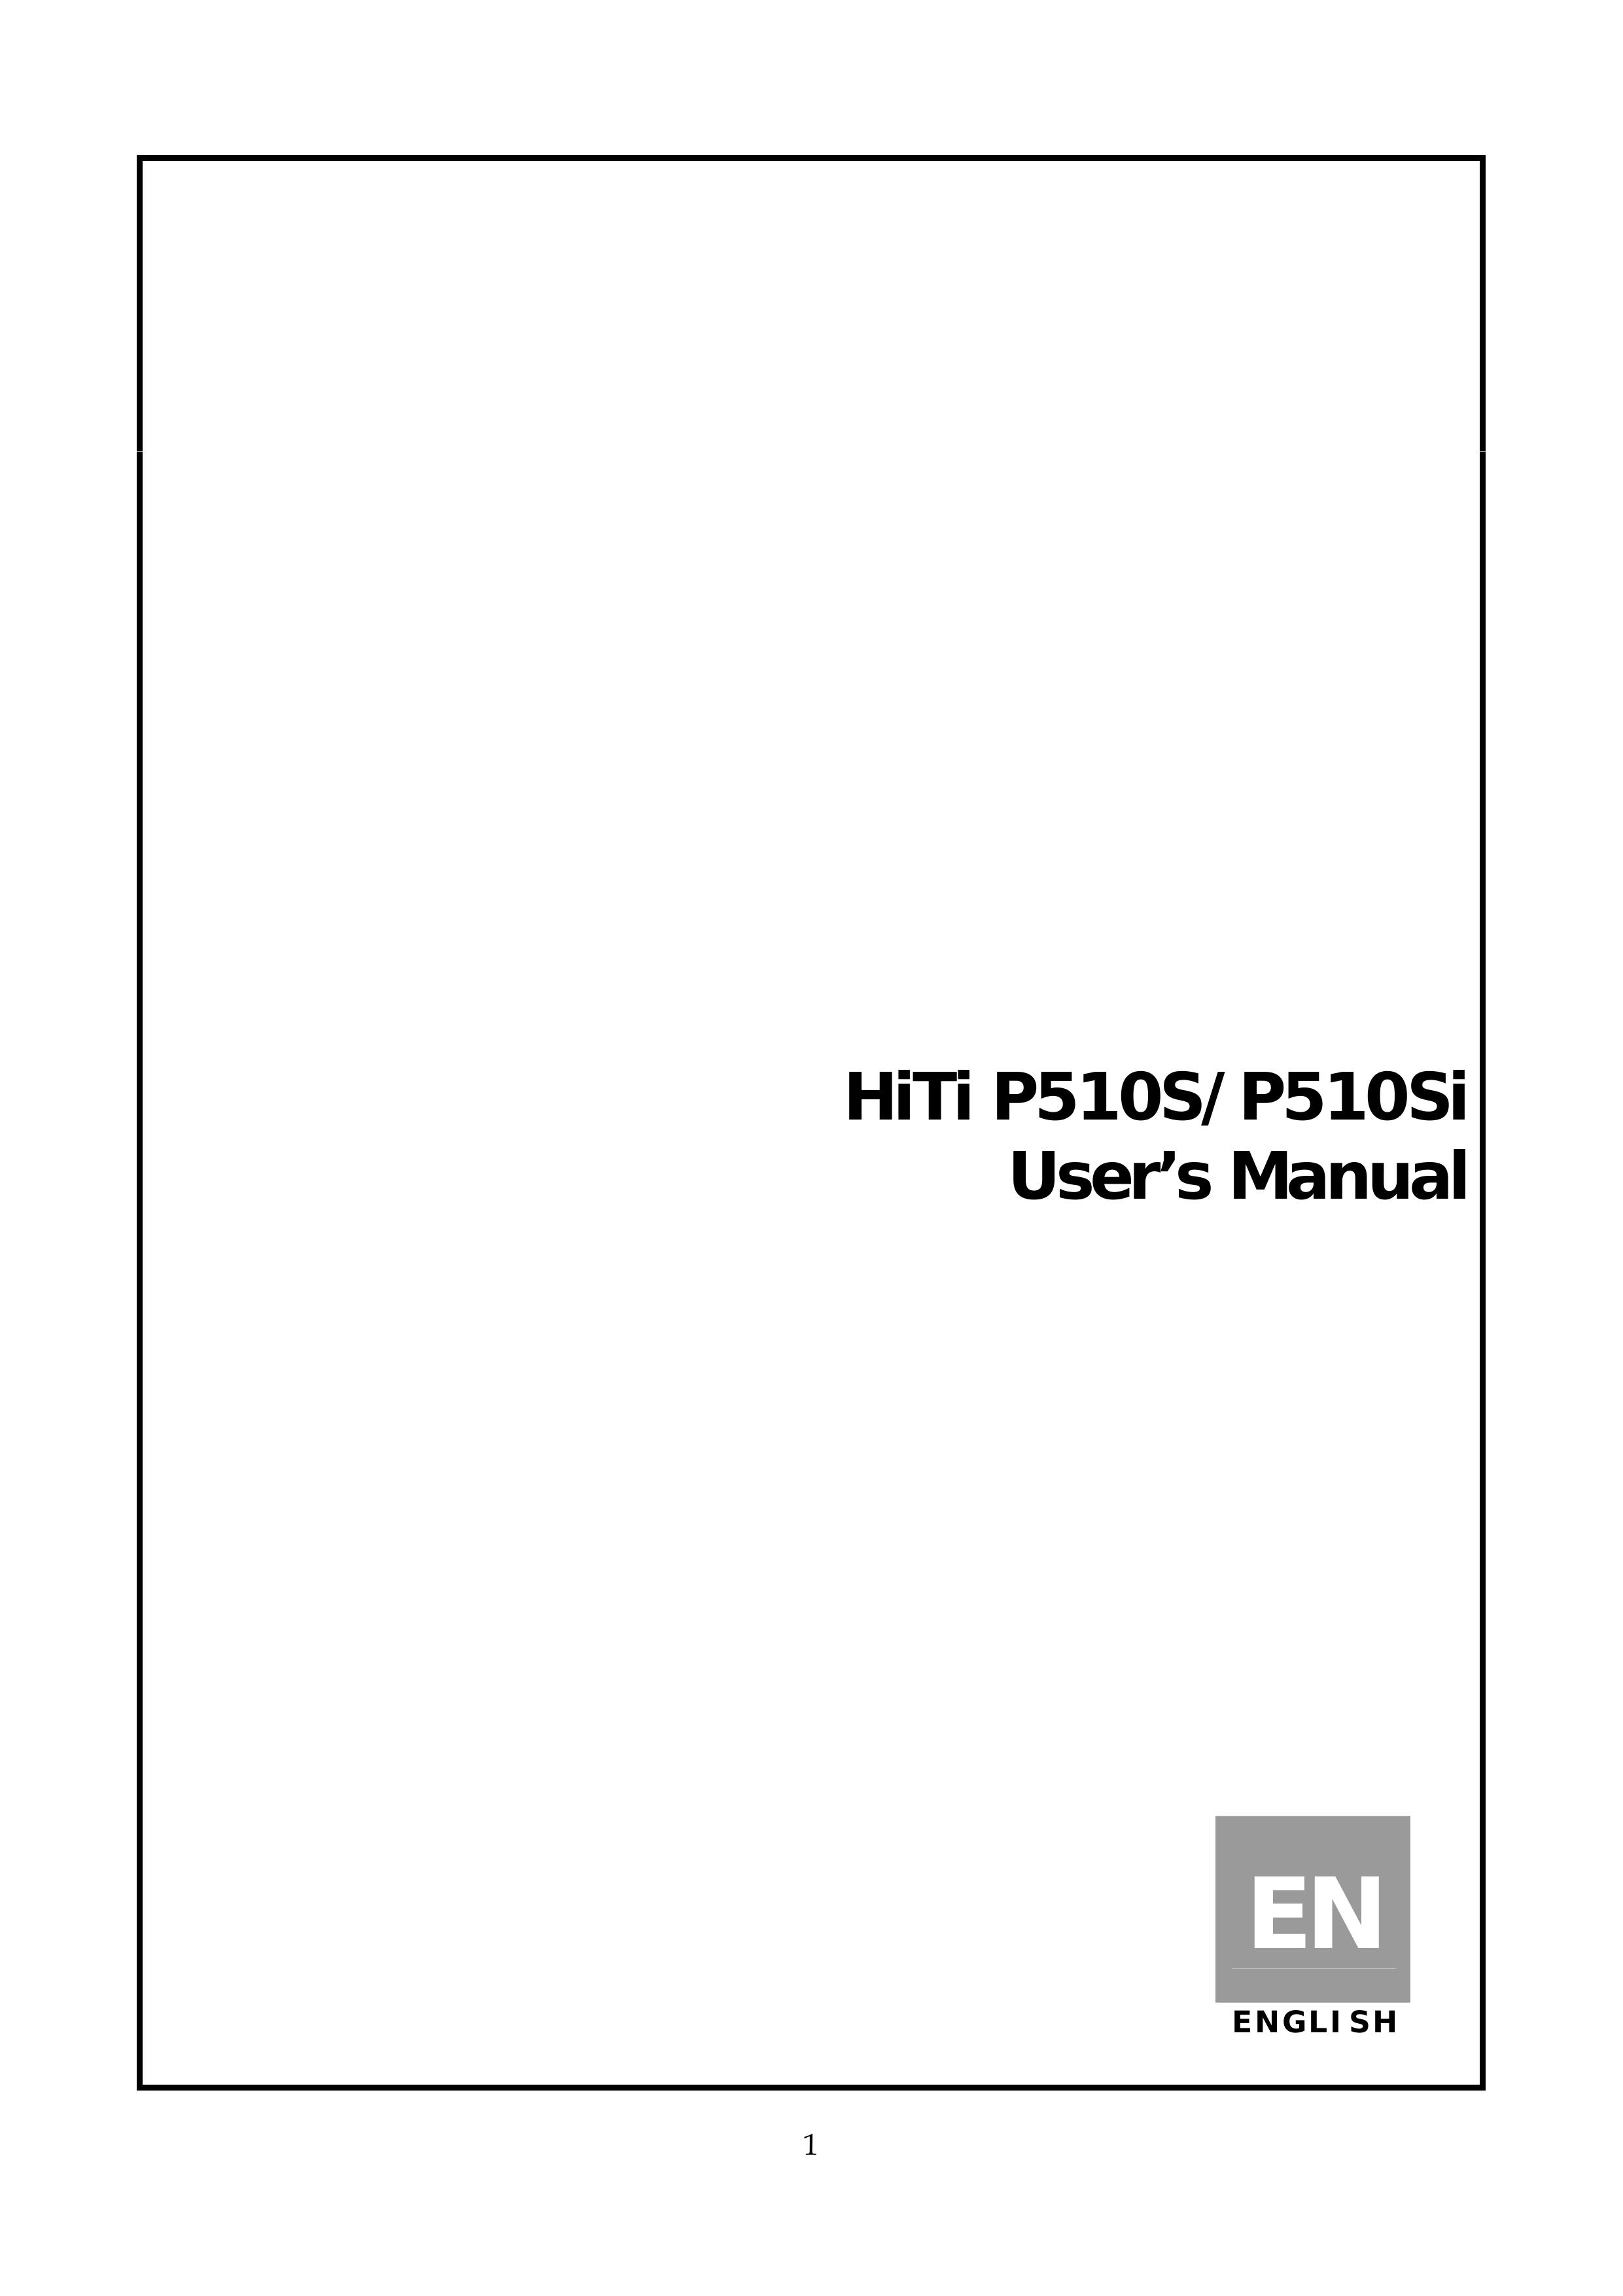 Hi-Touch Imaging Technologies P510Si Photo Printer User Manual